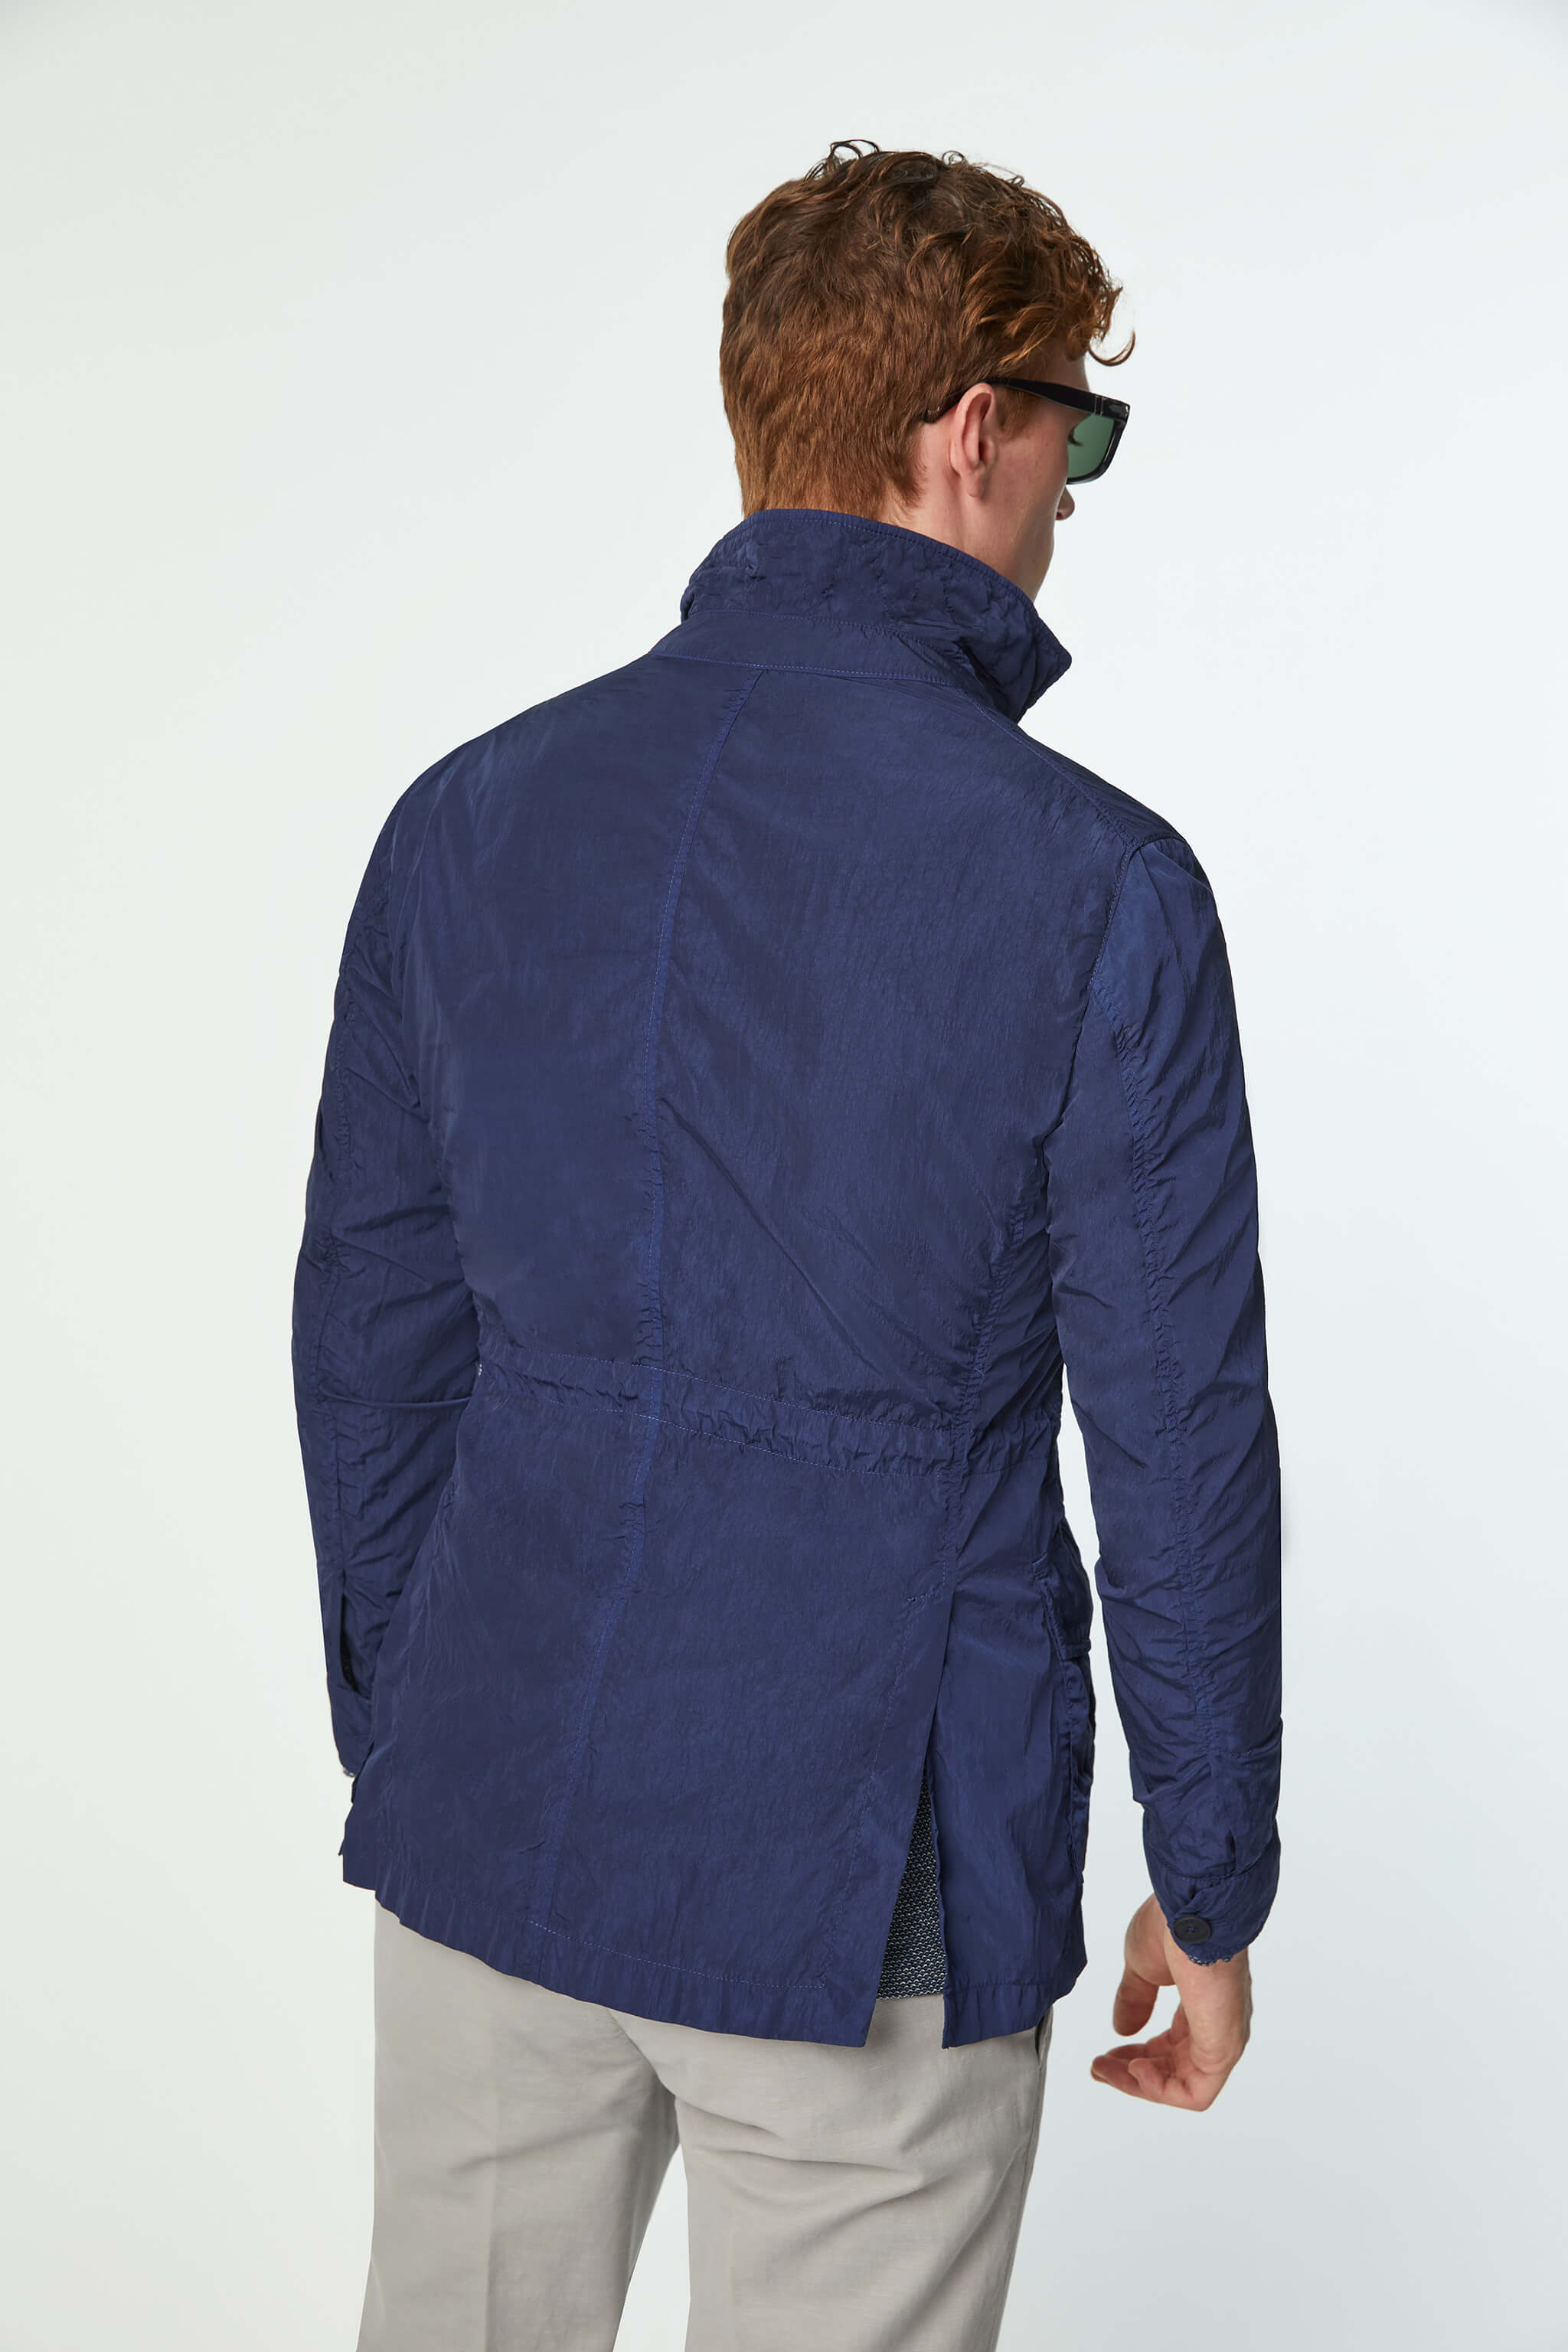 TRAVEL jacket in Blue